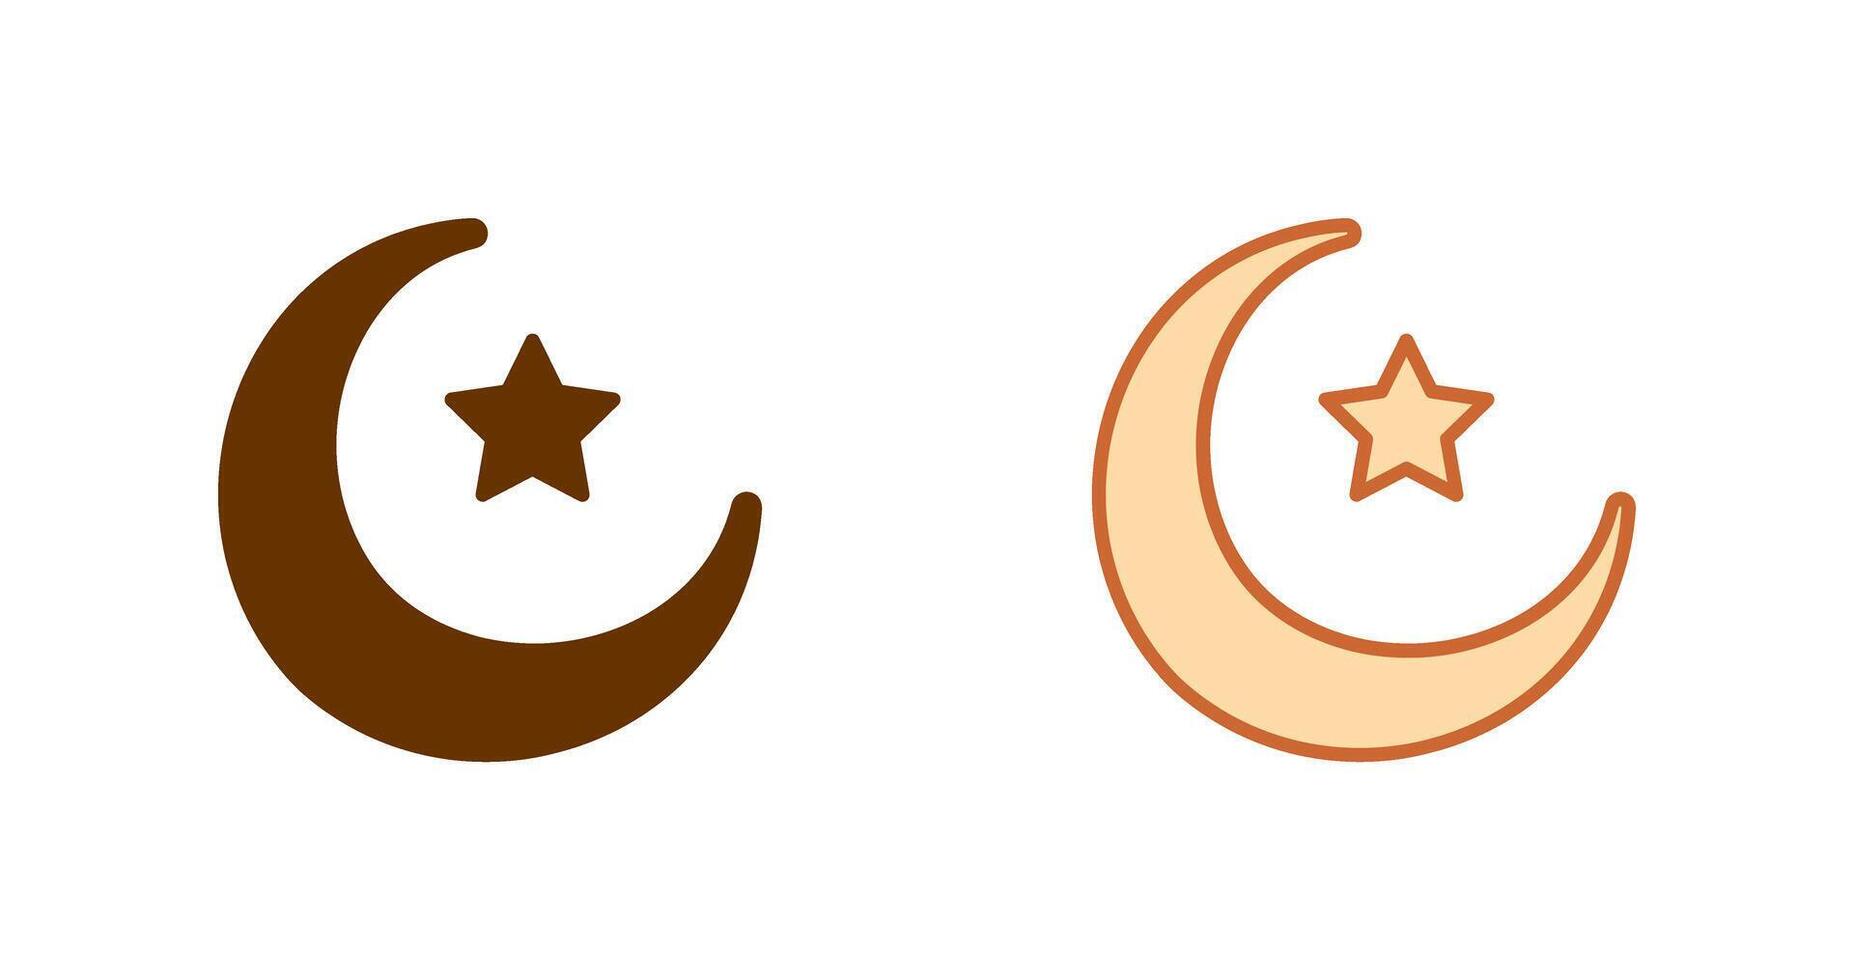 maan en ster icoon ontwerp vector